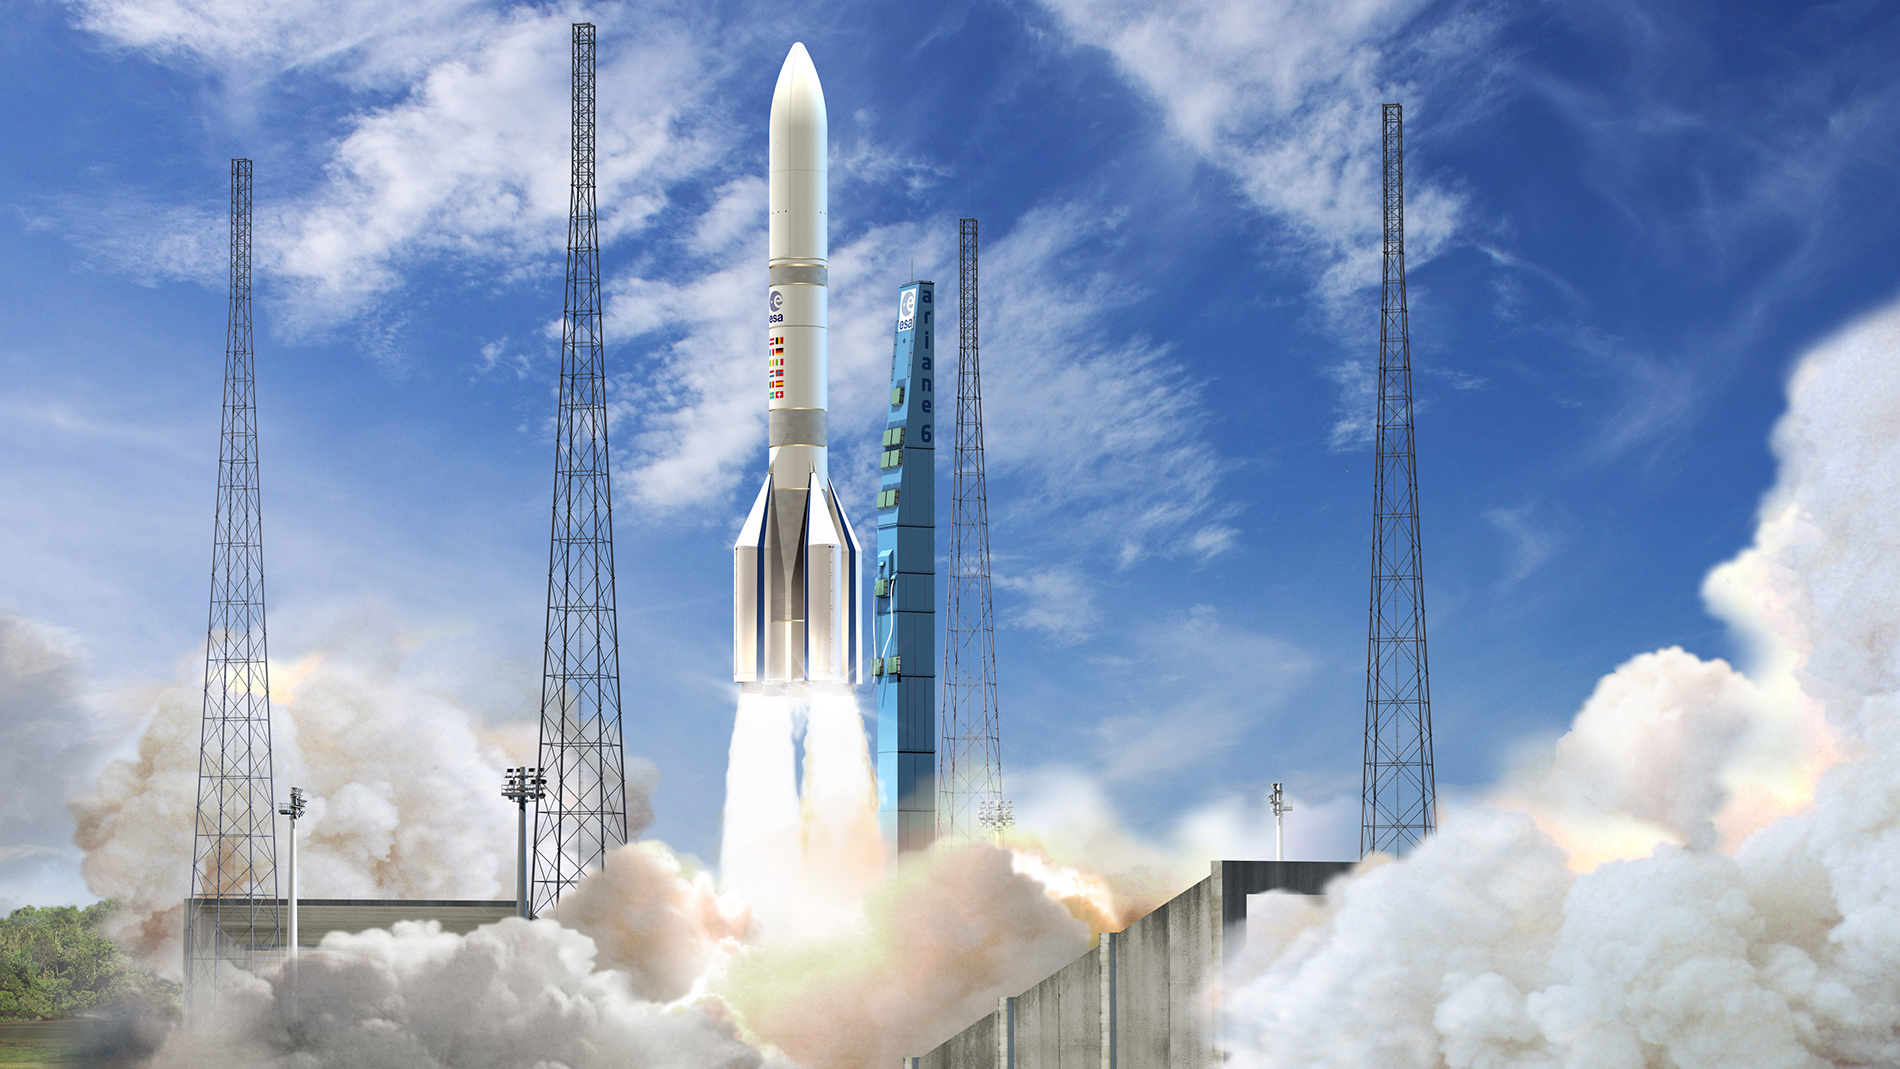 The new Ariane 6 rocket. Image: ESA/David Ducros